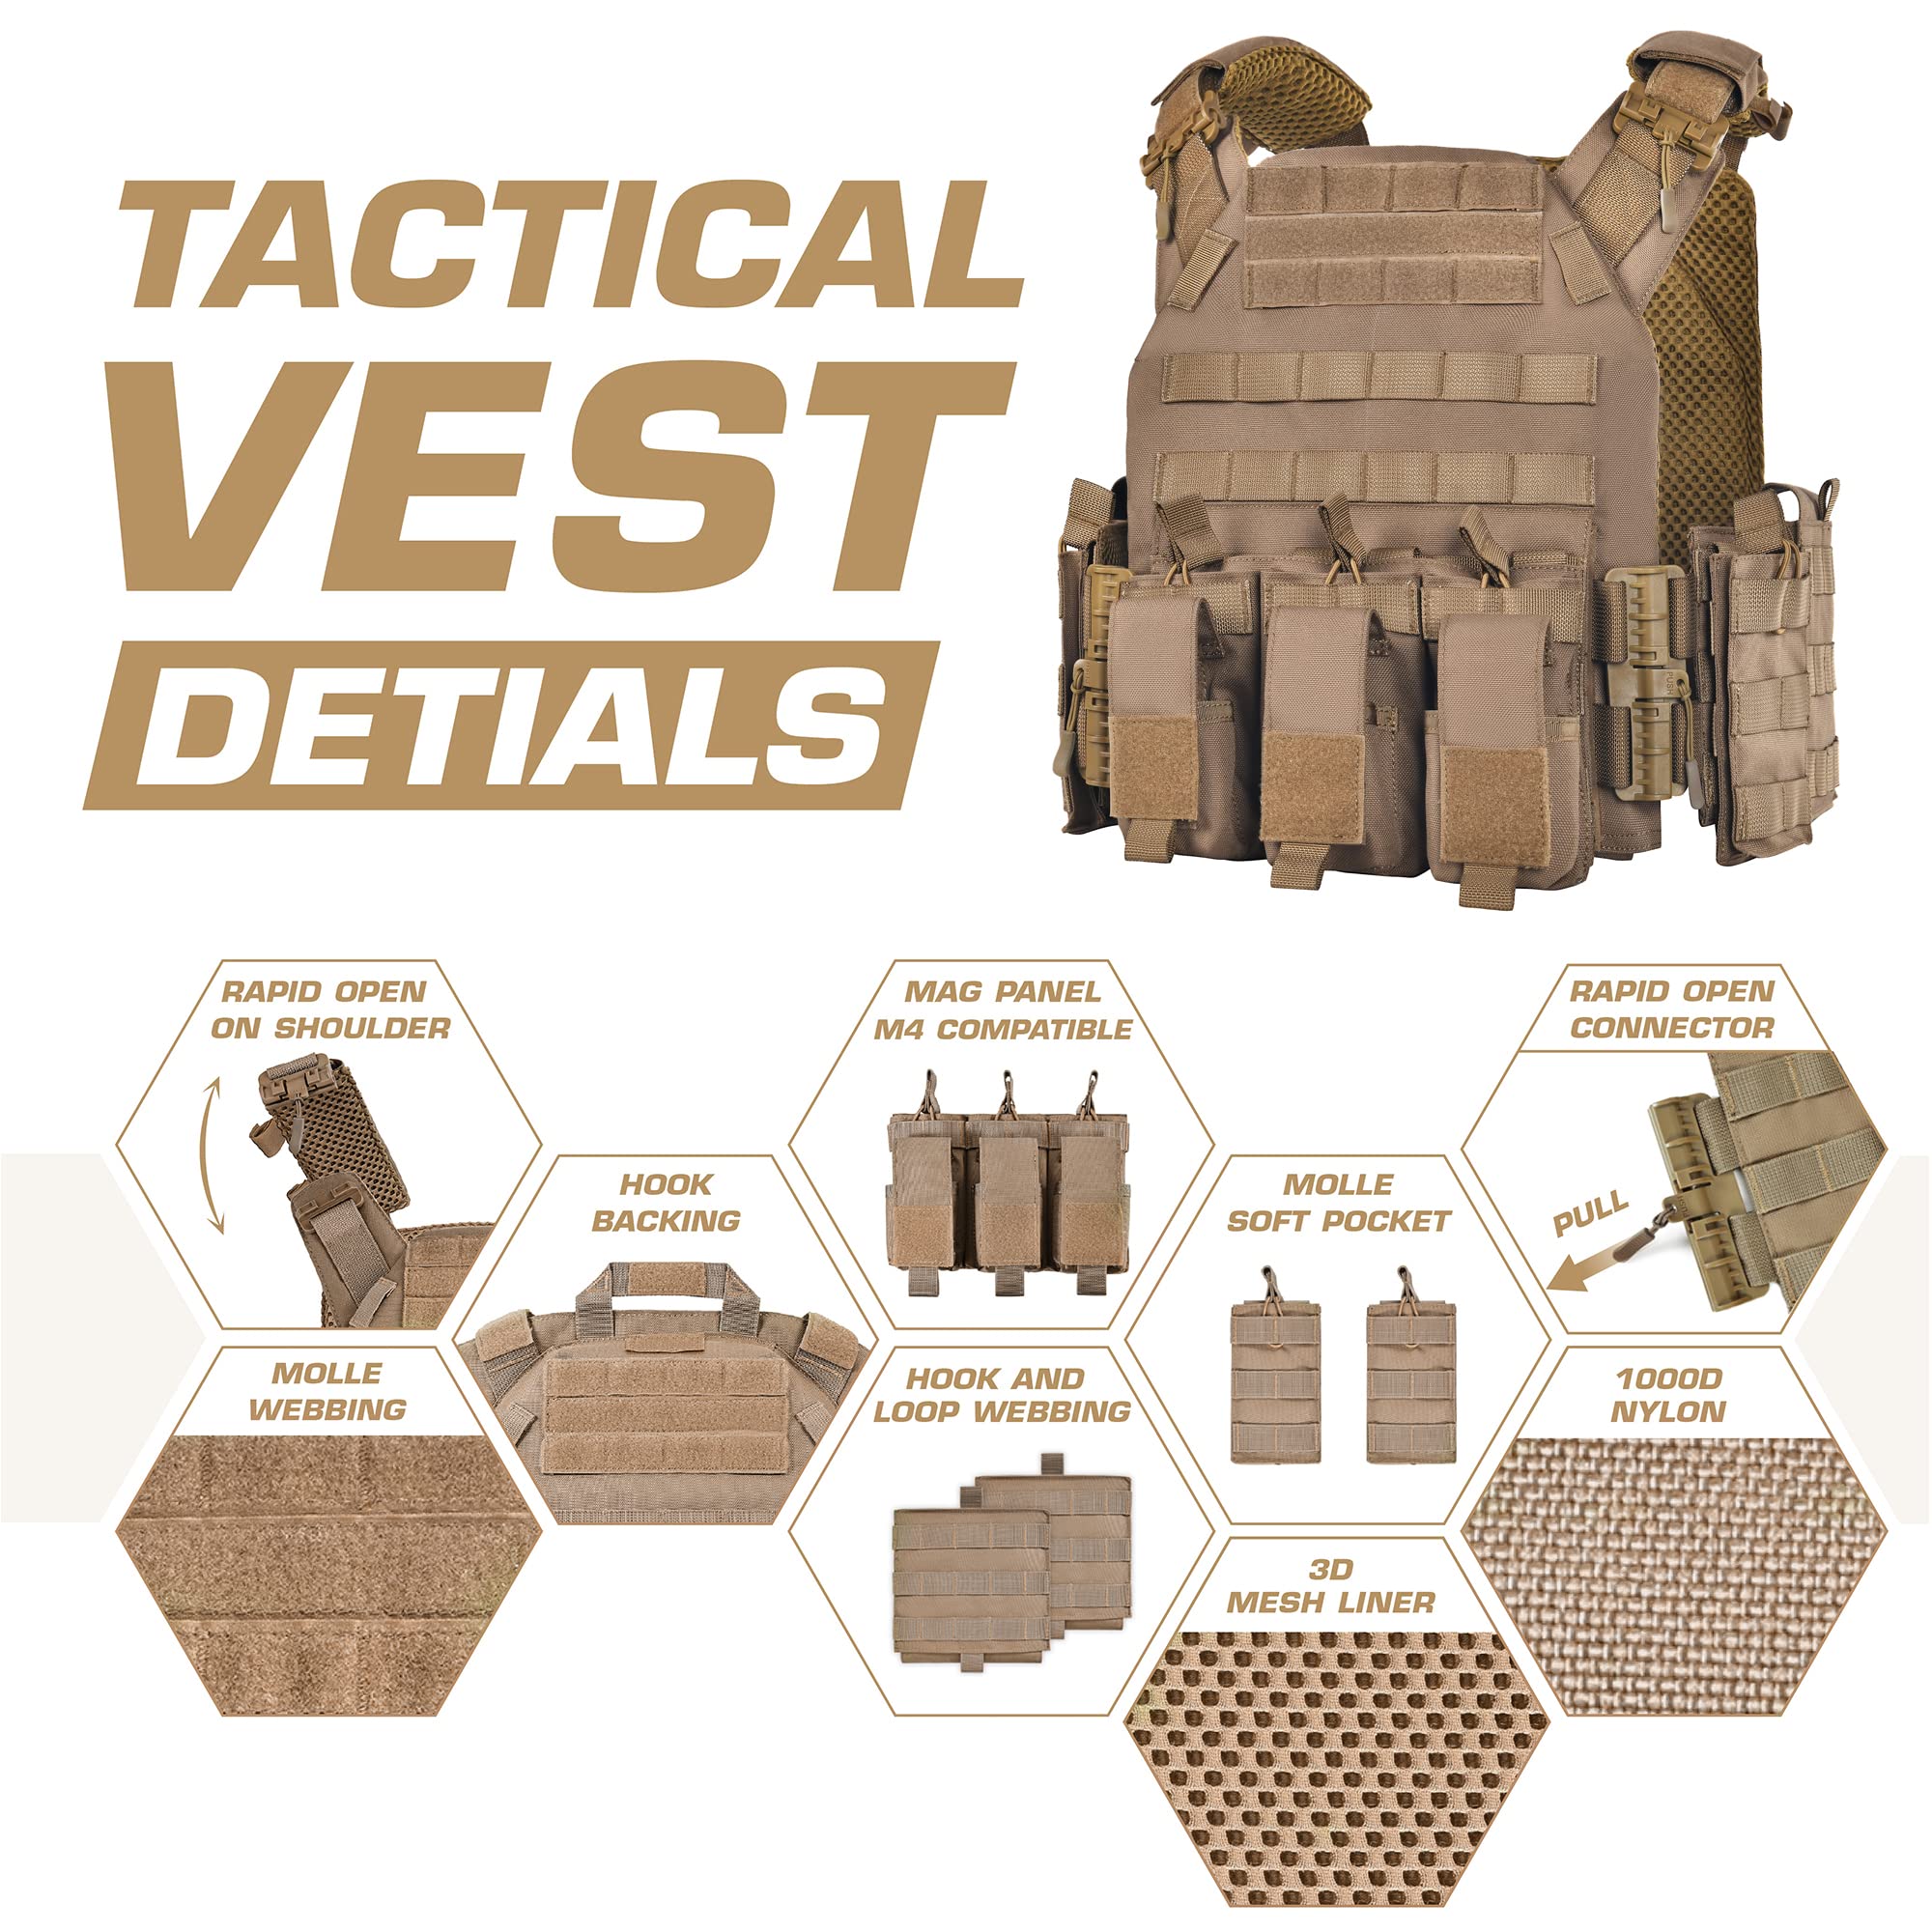 FIREGEAR Tactical Vest Weighted Vest Airsoft Vest,3D Breathable Adjustable Modular Quick Release Vest